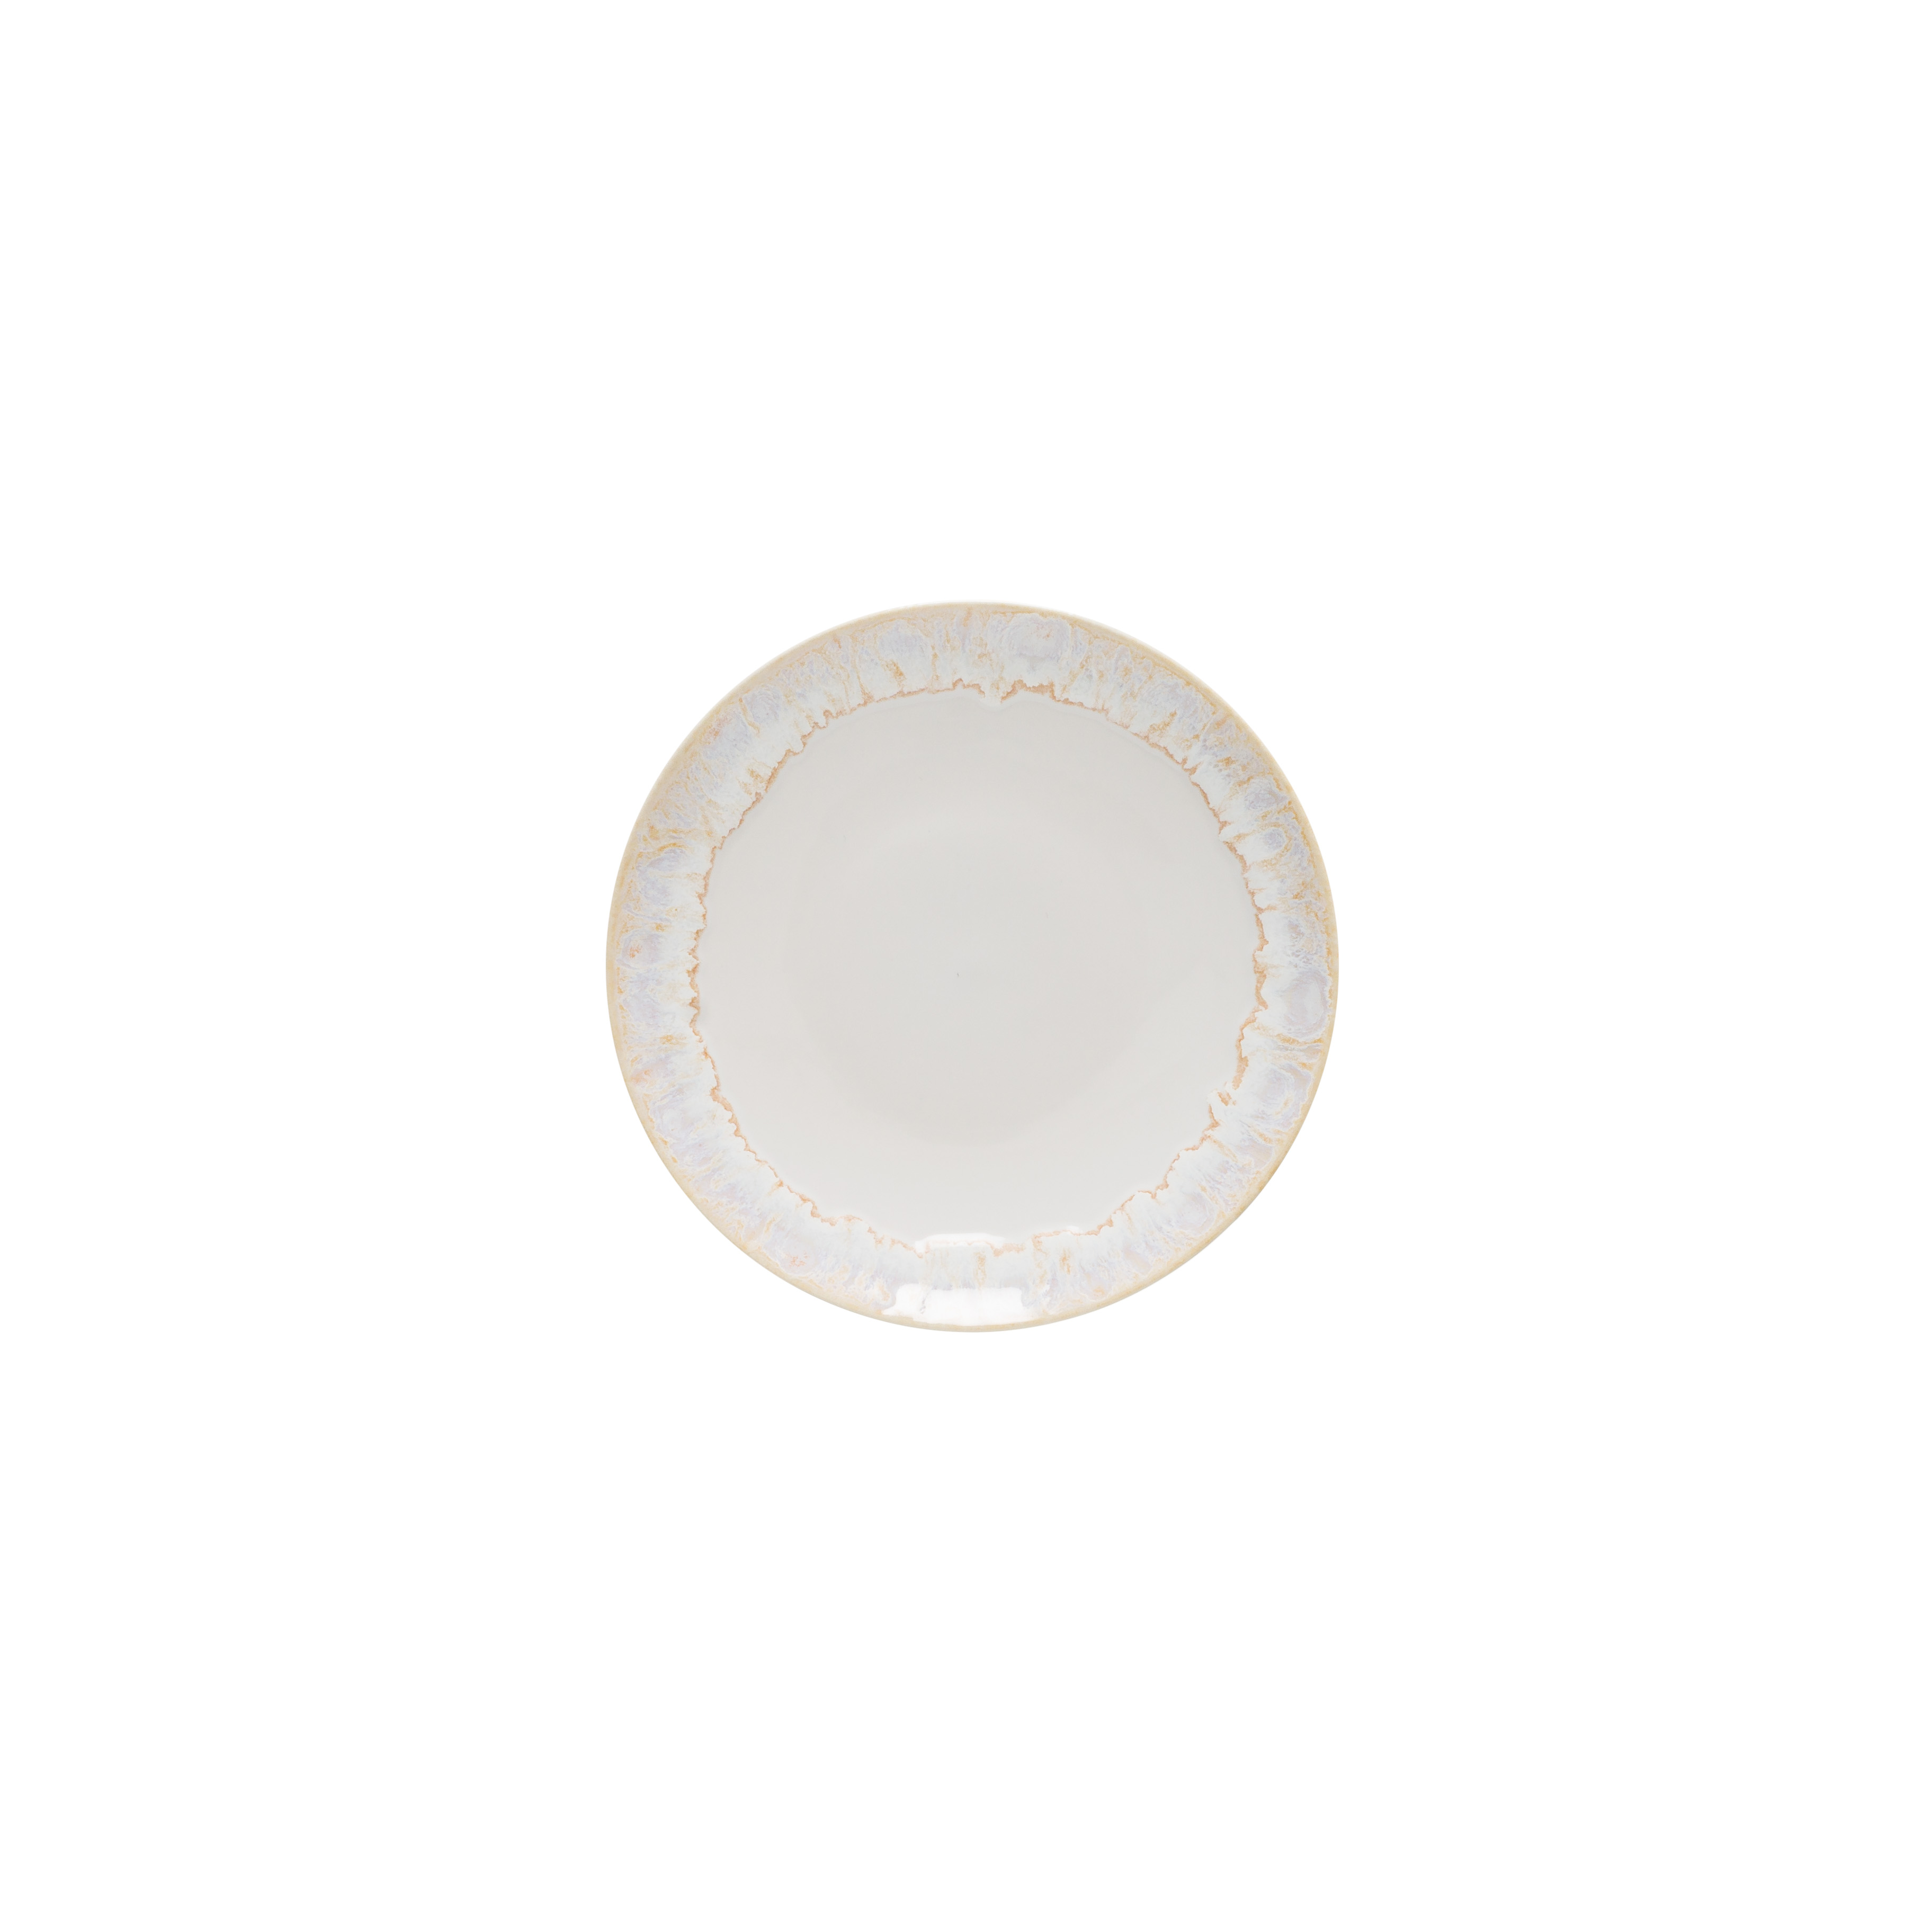 Taormina White Bread Plate 16.7cm Gift